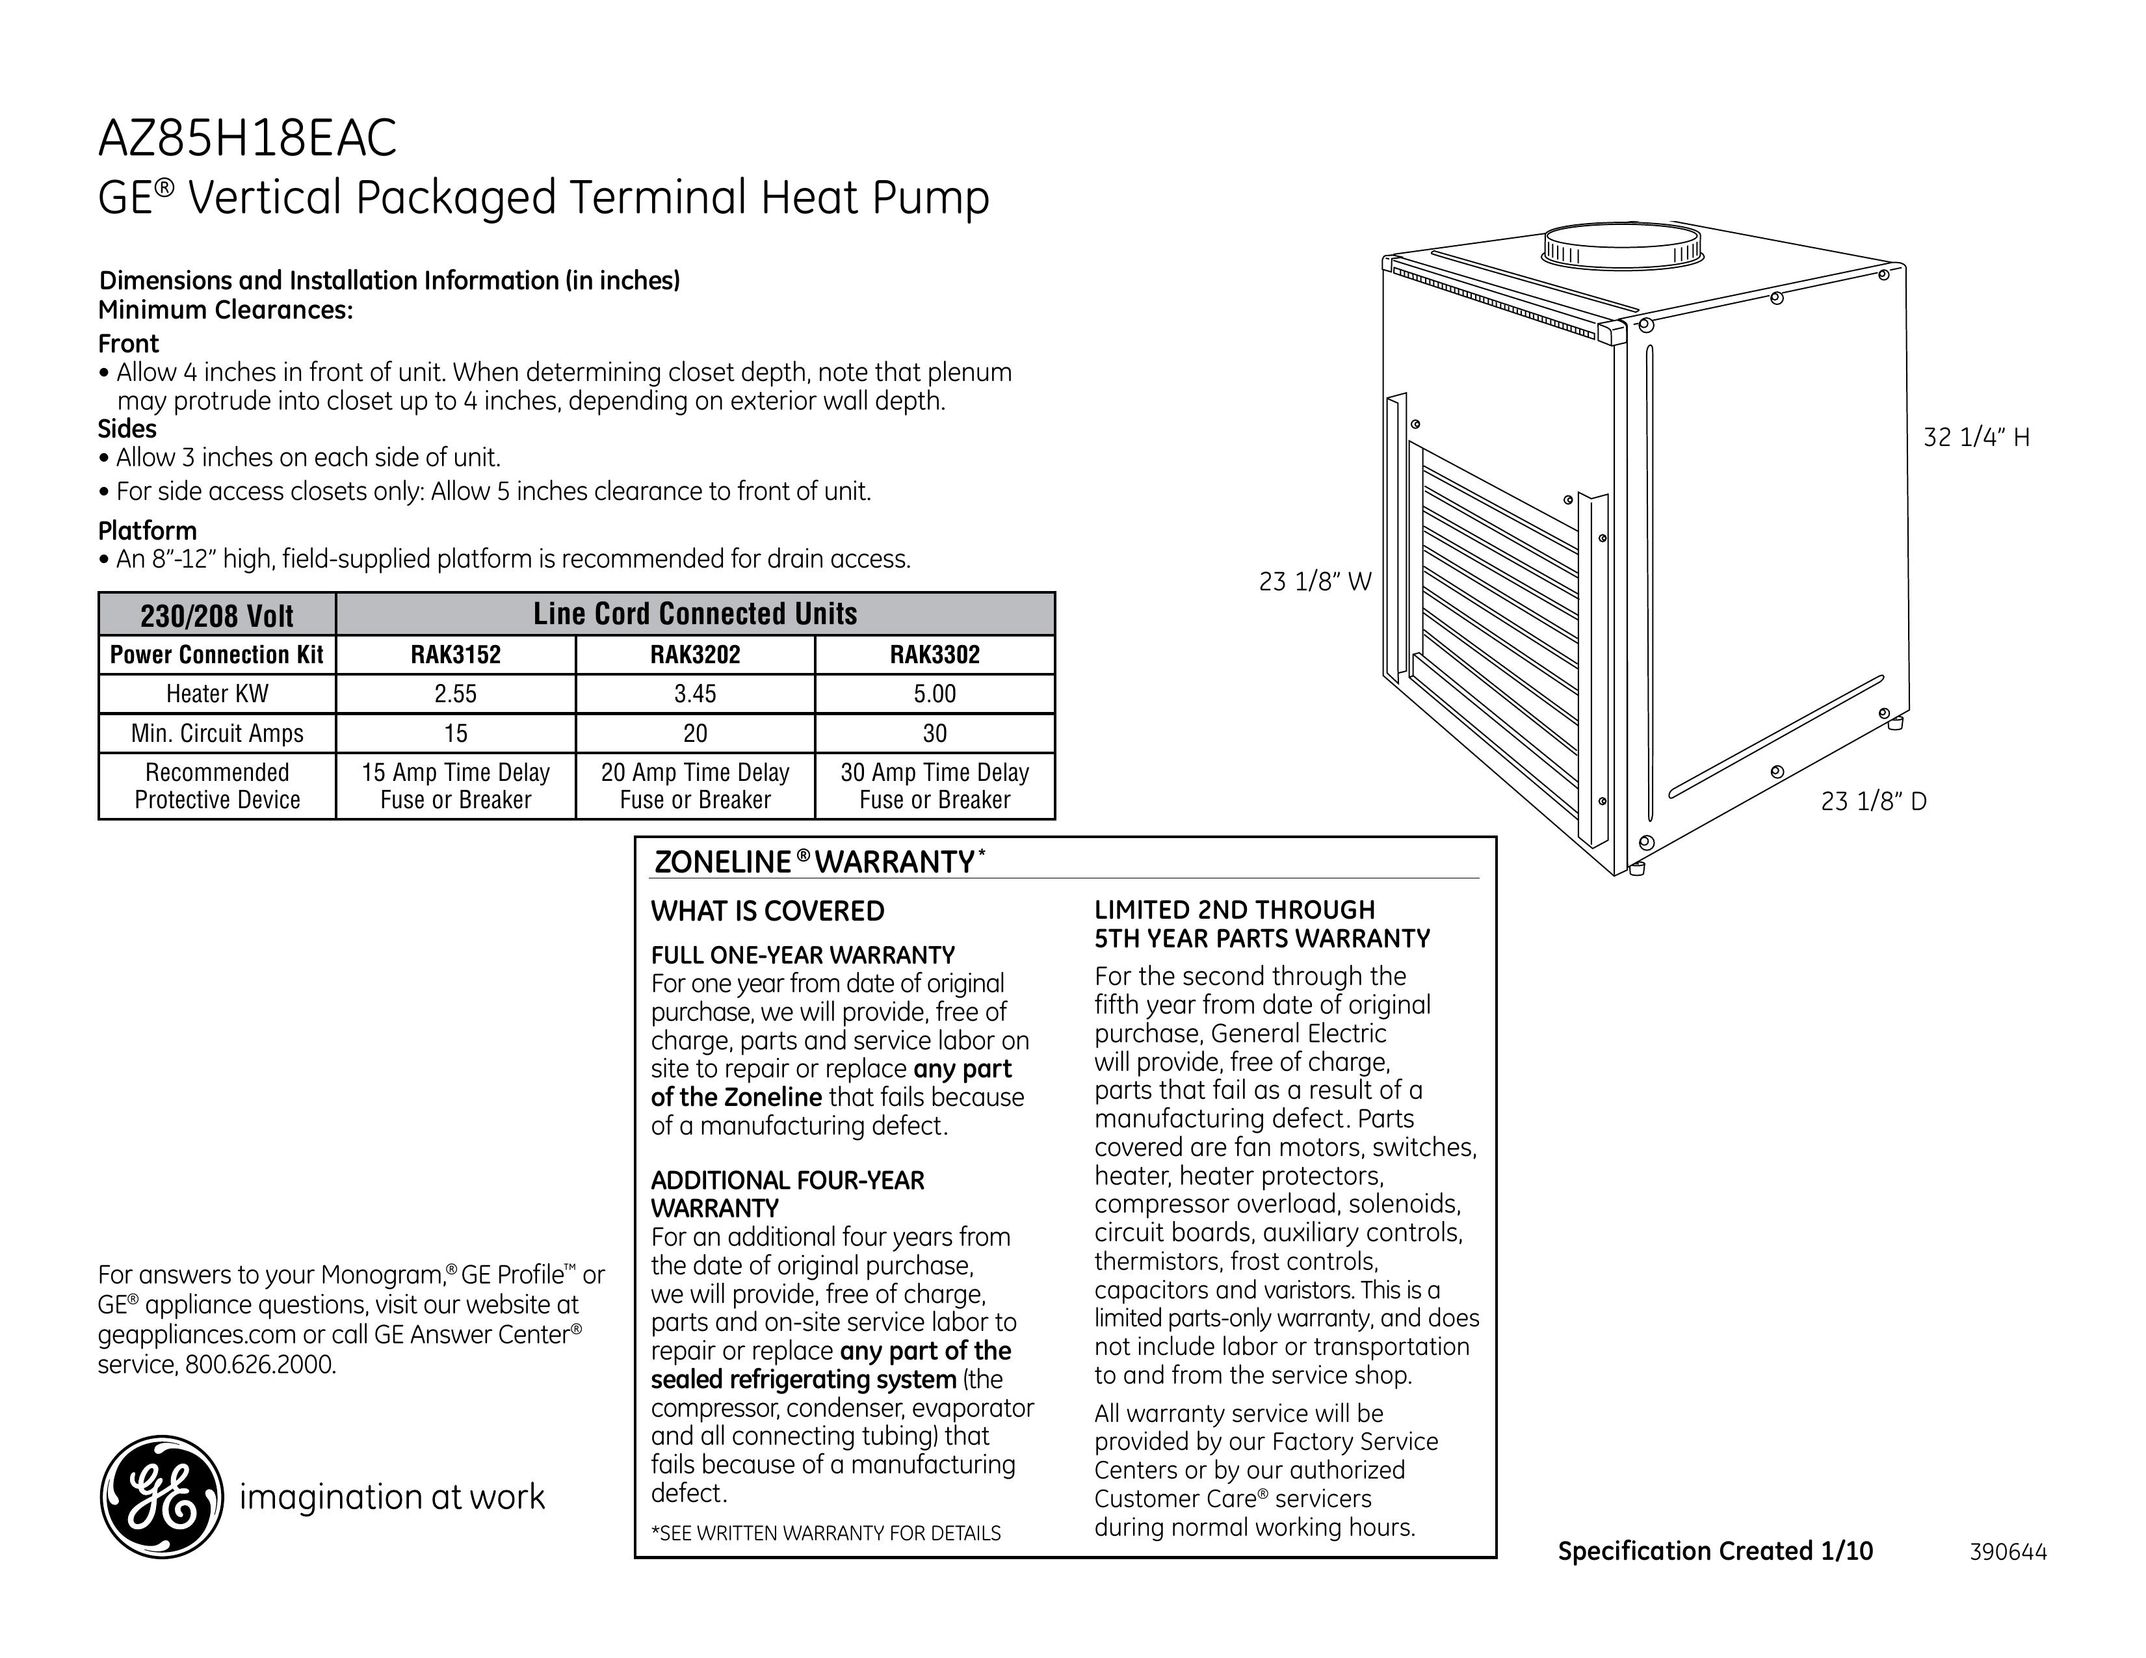 GE AZ85H18EAC Heat Pump User Manual